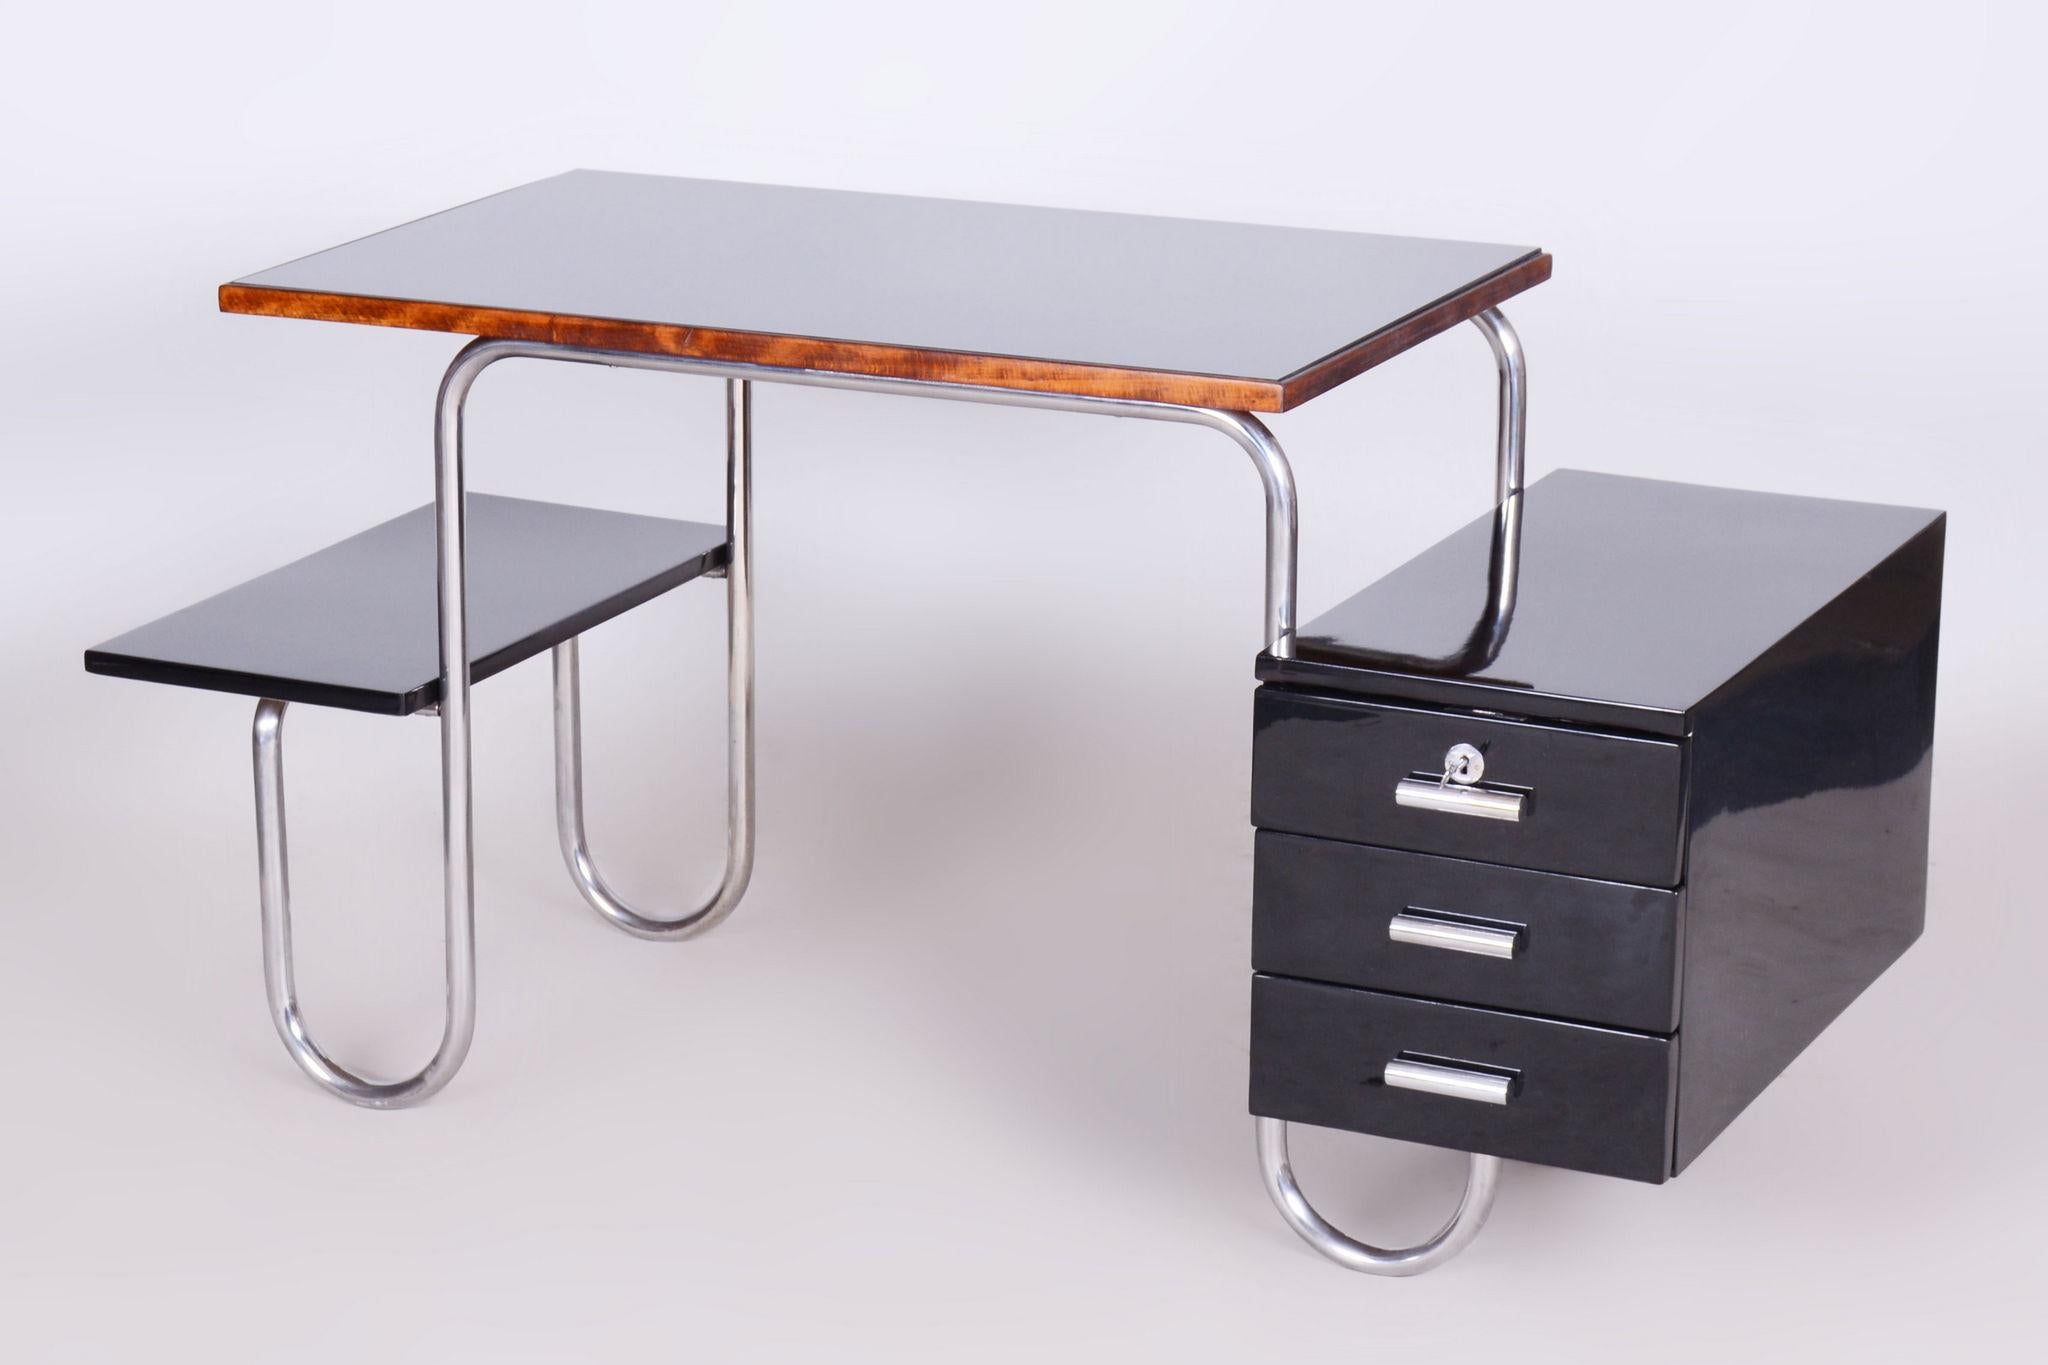 Restored Bauhaus Writing Desk, Chrome-Plated Steel, Black Glass, Czechia, 1930s For Sale 1